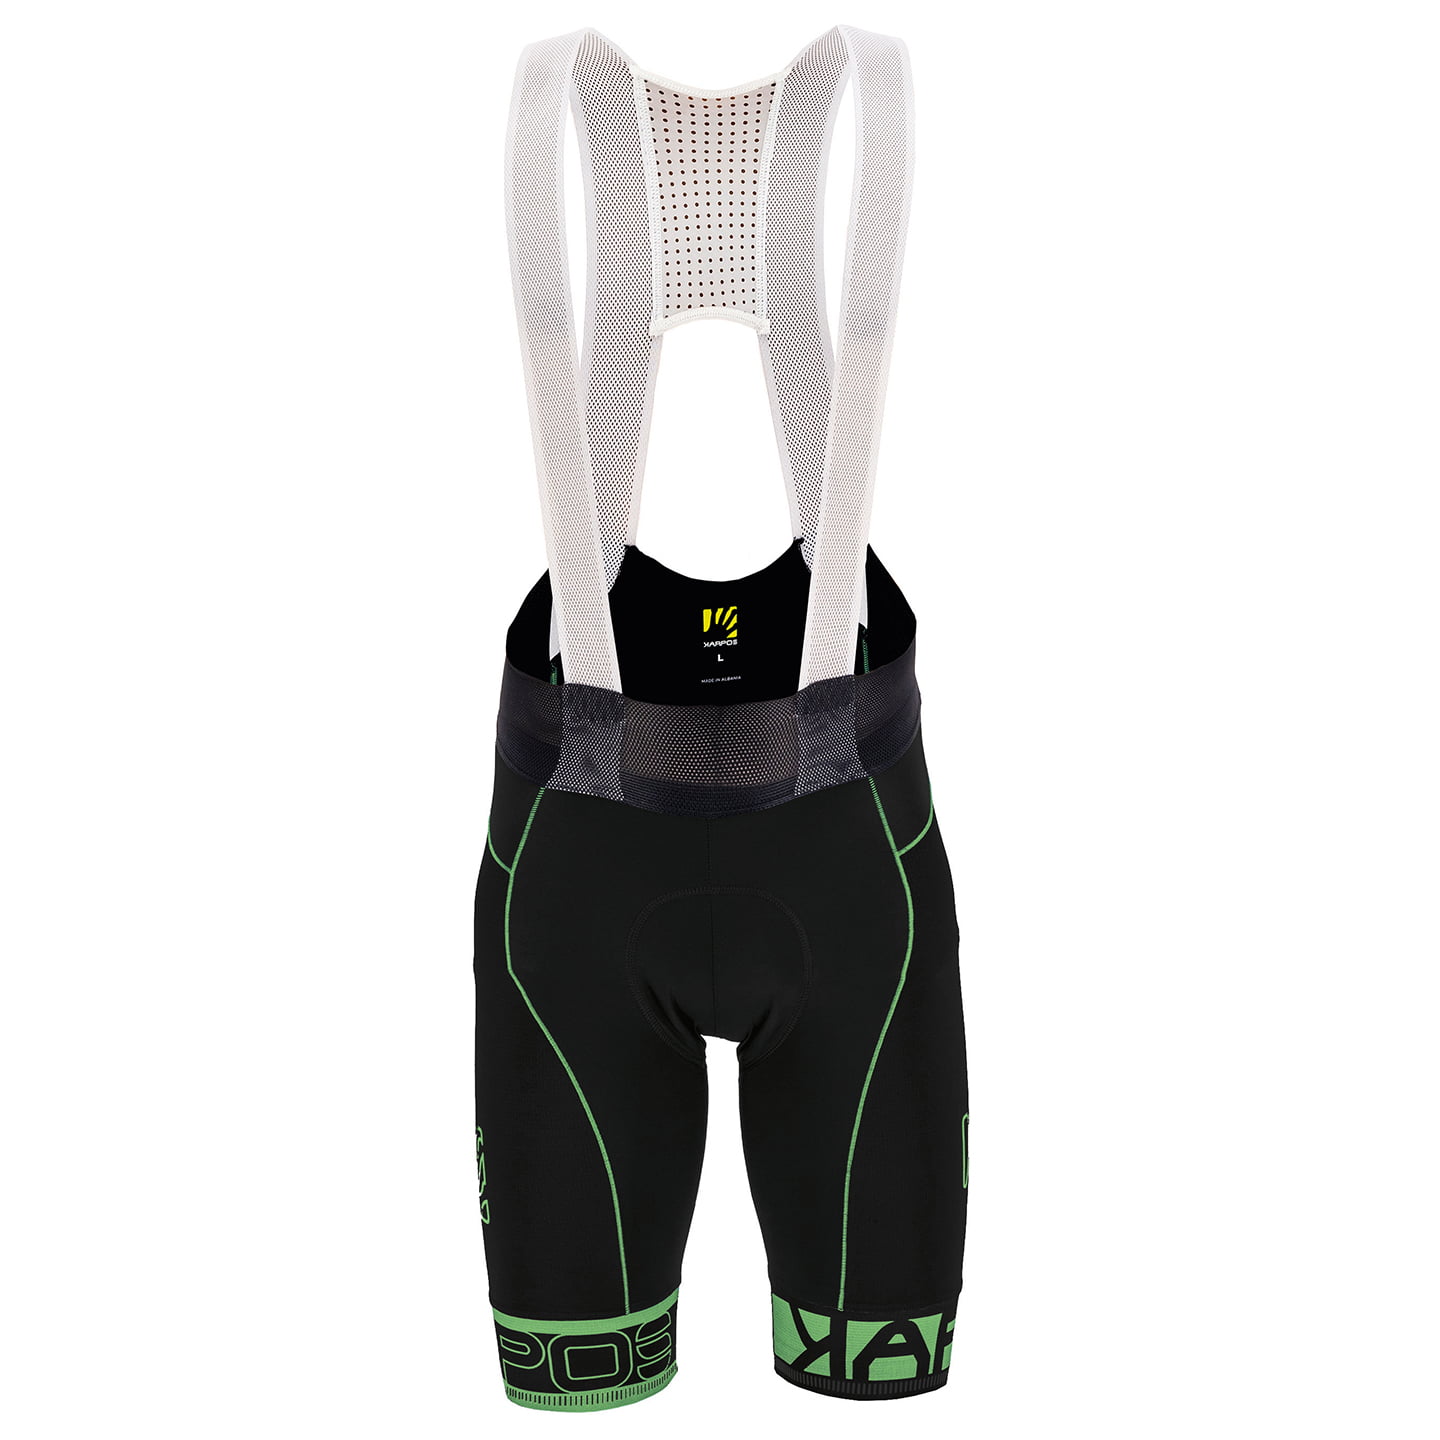 KARPOS Verve Evo Bib Shorts Bib Shorts, for men, size 2XL, Cycle shorts, Cycling clothing